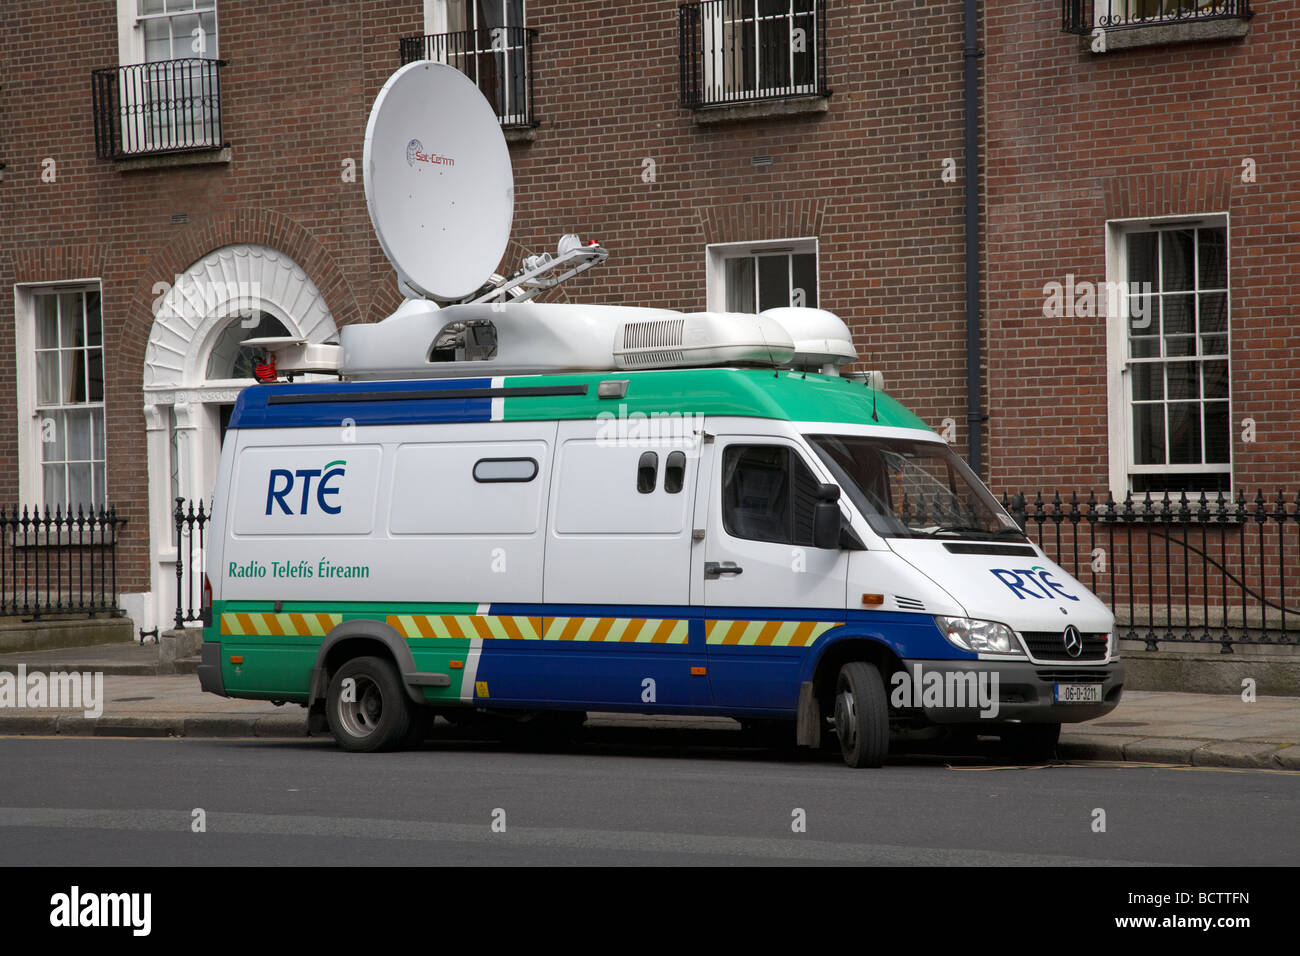 RTE radio telefis eireann difusora estatal irlandesa Outside Broadcast Satellite Communications camión estacionado en Merrion Square Foto de stock